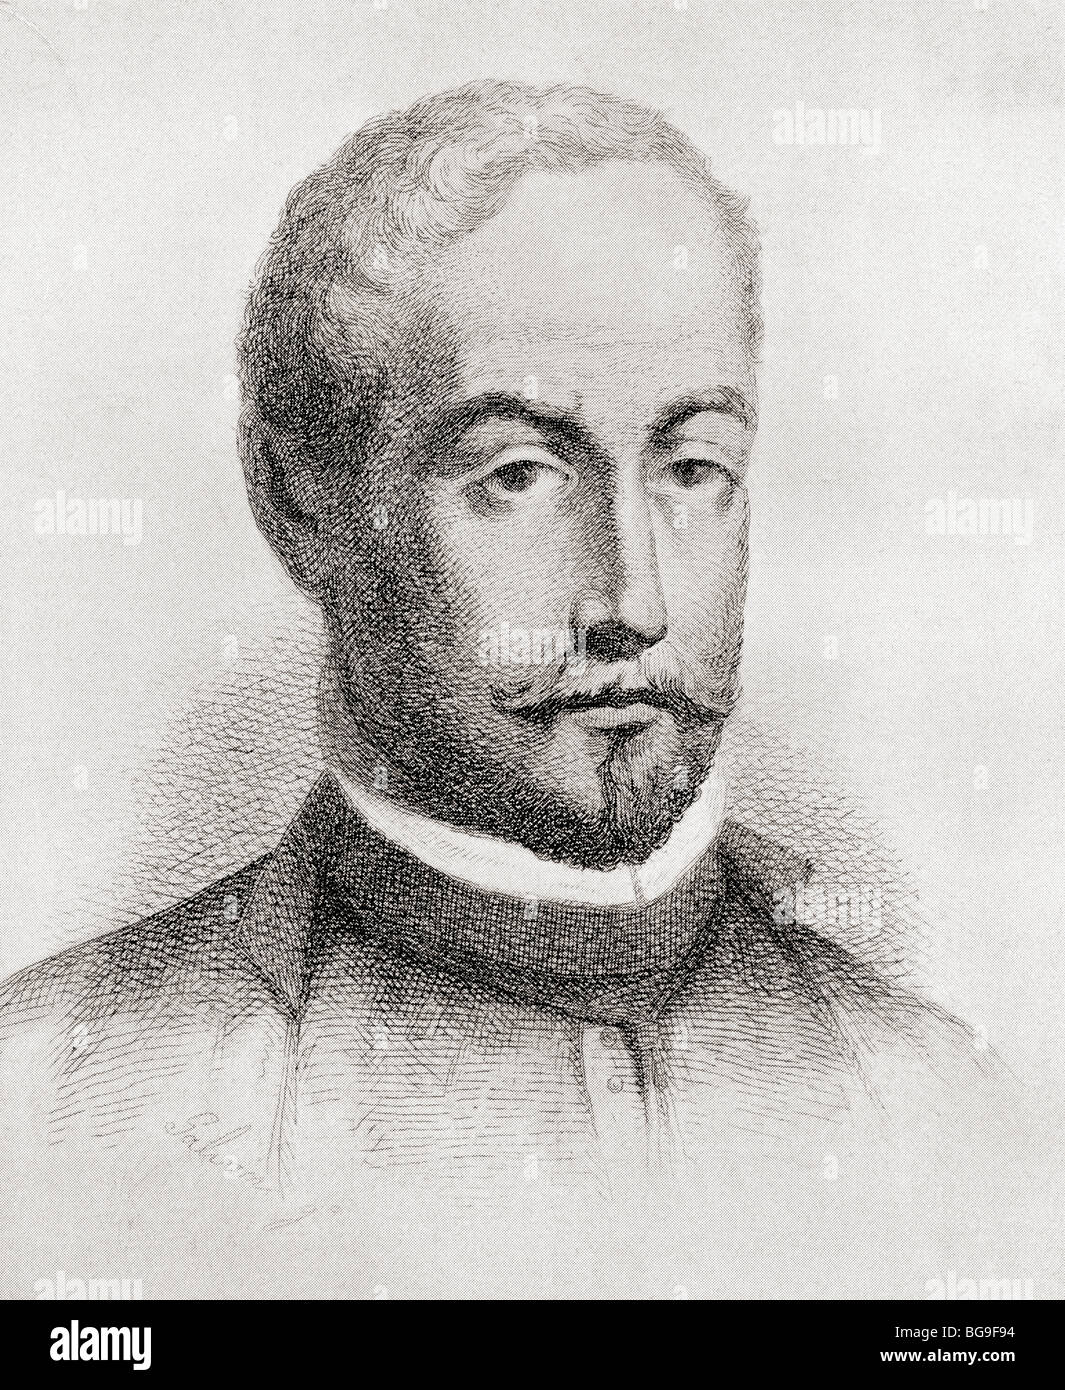 Francisco de Rioja, 1583 to 1659. Spanish poet and scholar of the Baroque period. Stock Photo